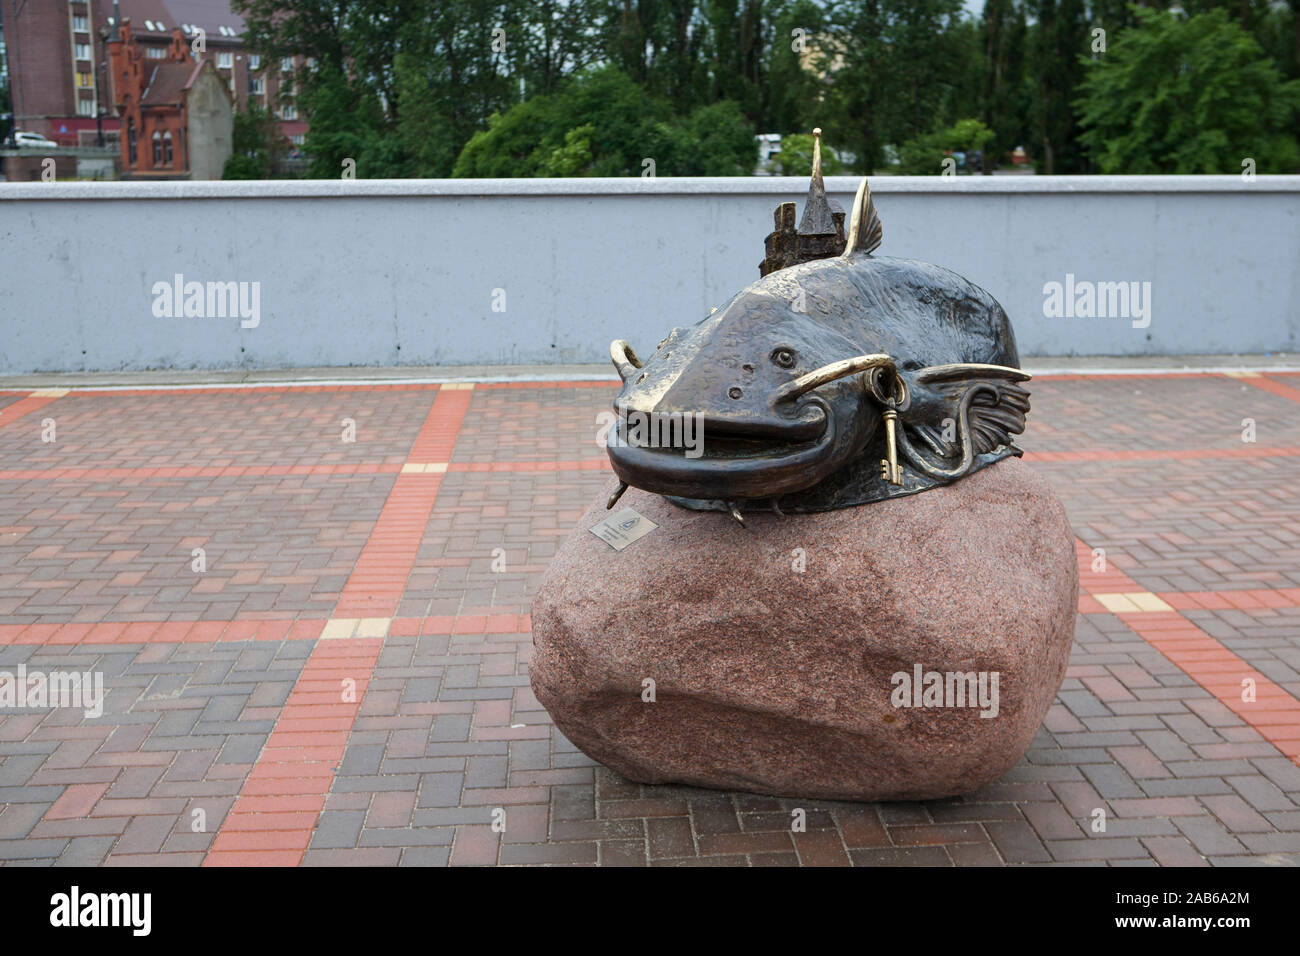 Kaliningrad, Kaliningrad Oblast, Russia - catfish sculpture Stock Photo